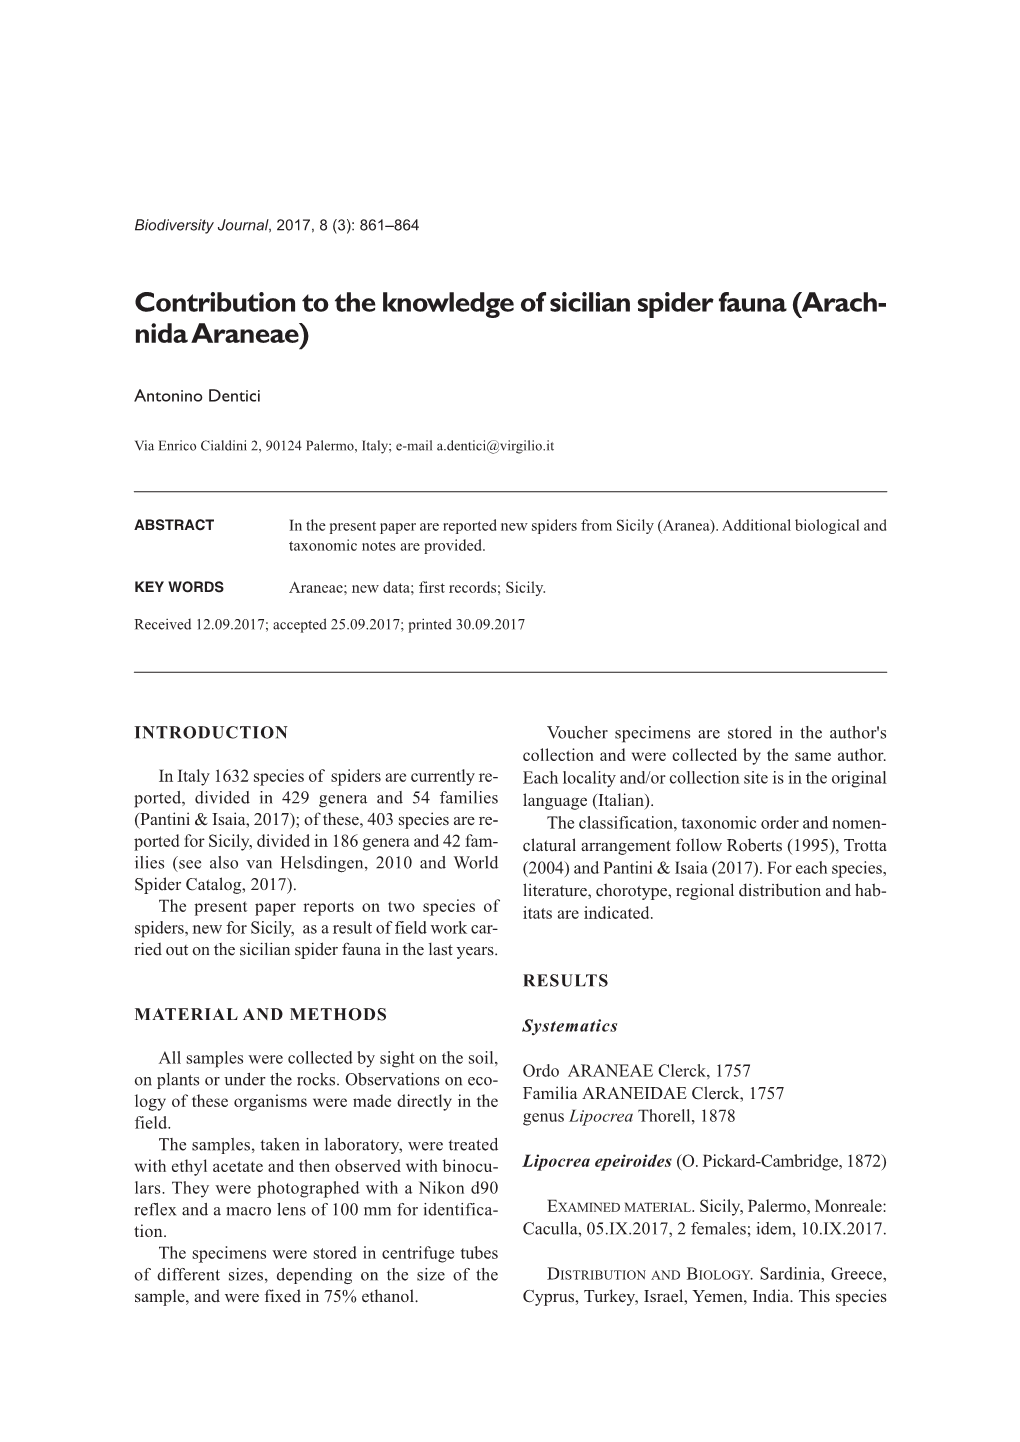 Contribution to the Knowledge of Sicilian Spider Fauna (Arach- Nida Araneae)